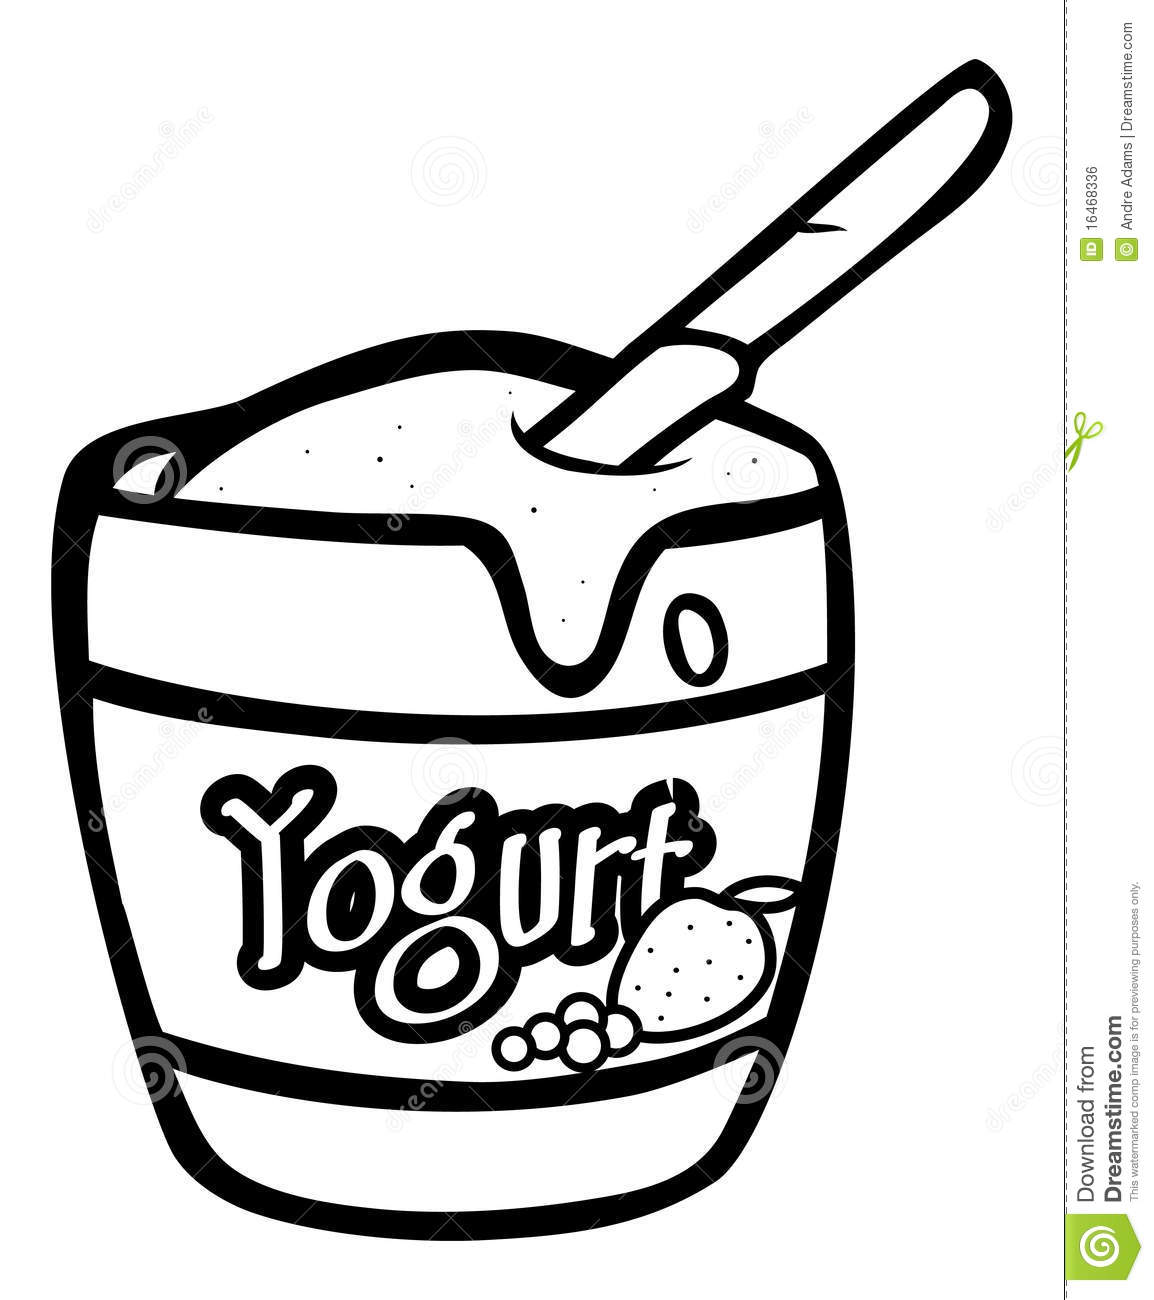 Yogurt clipart, cliparts of Y